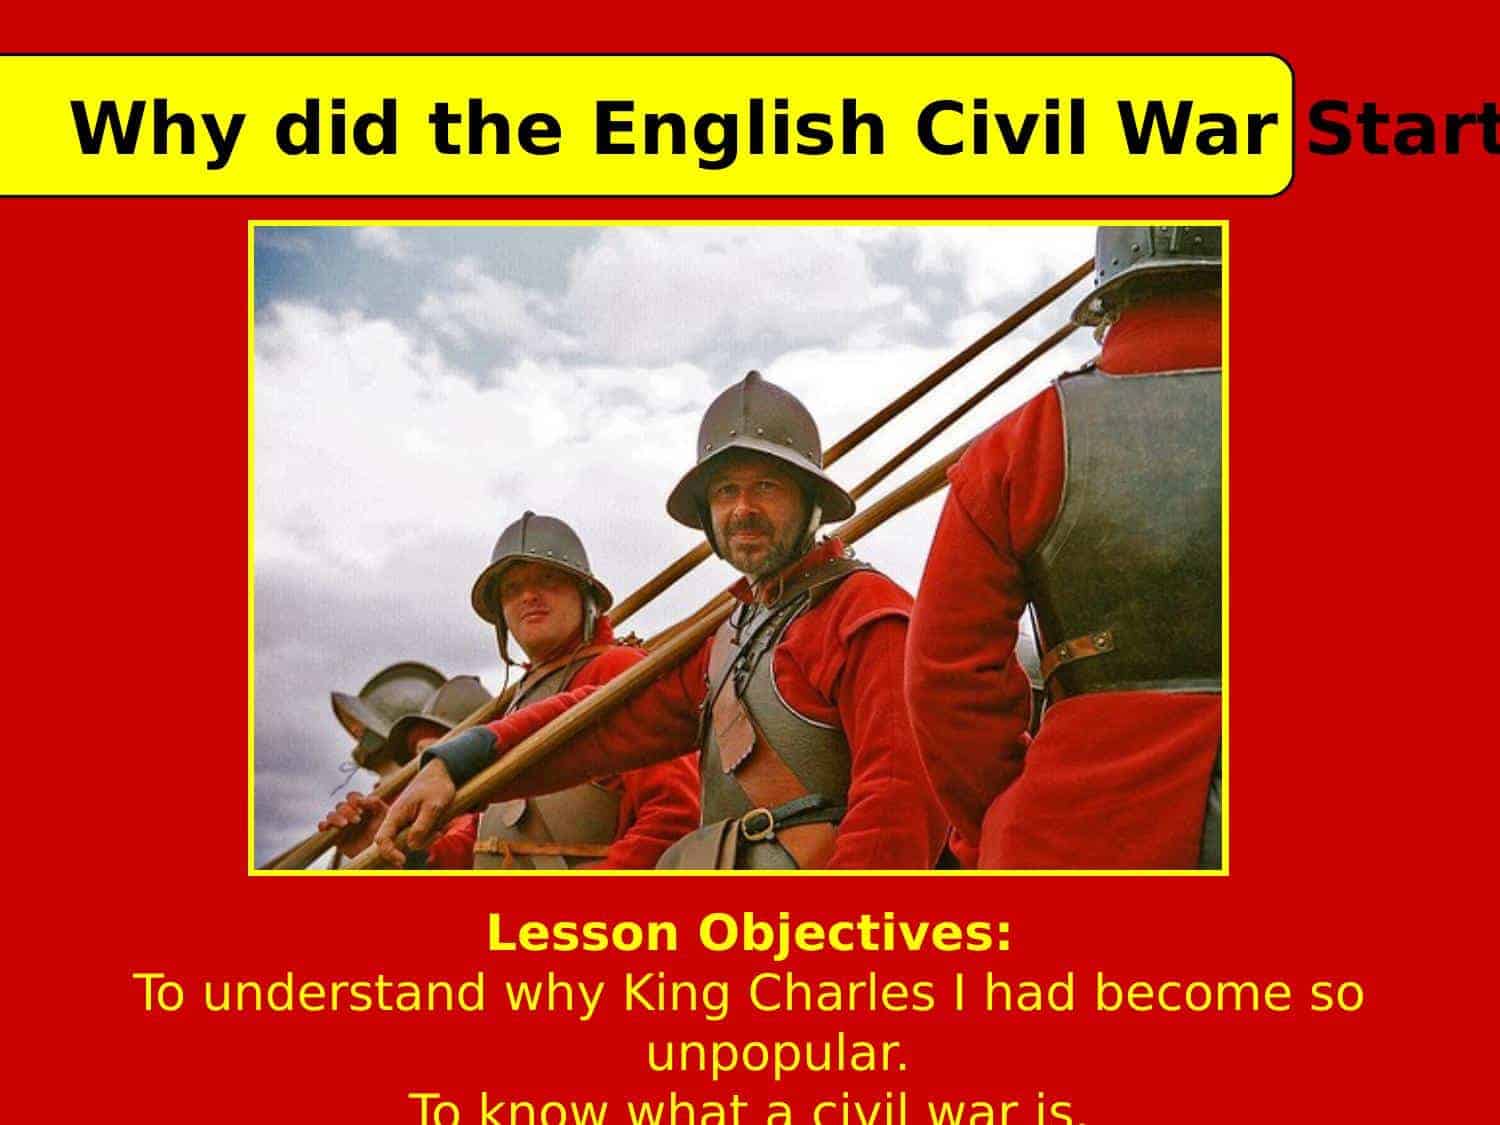 causes of the english civil war ks3 essay